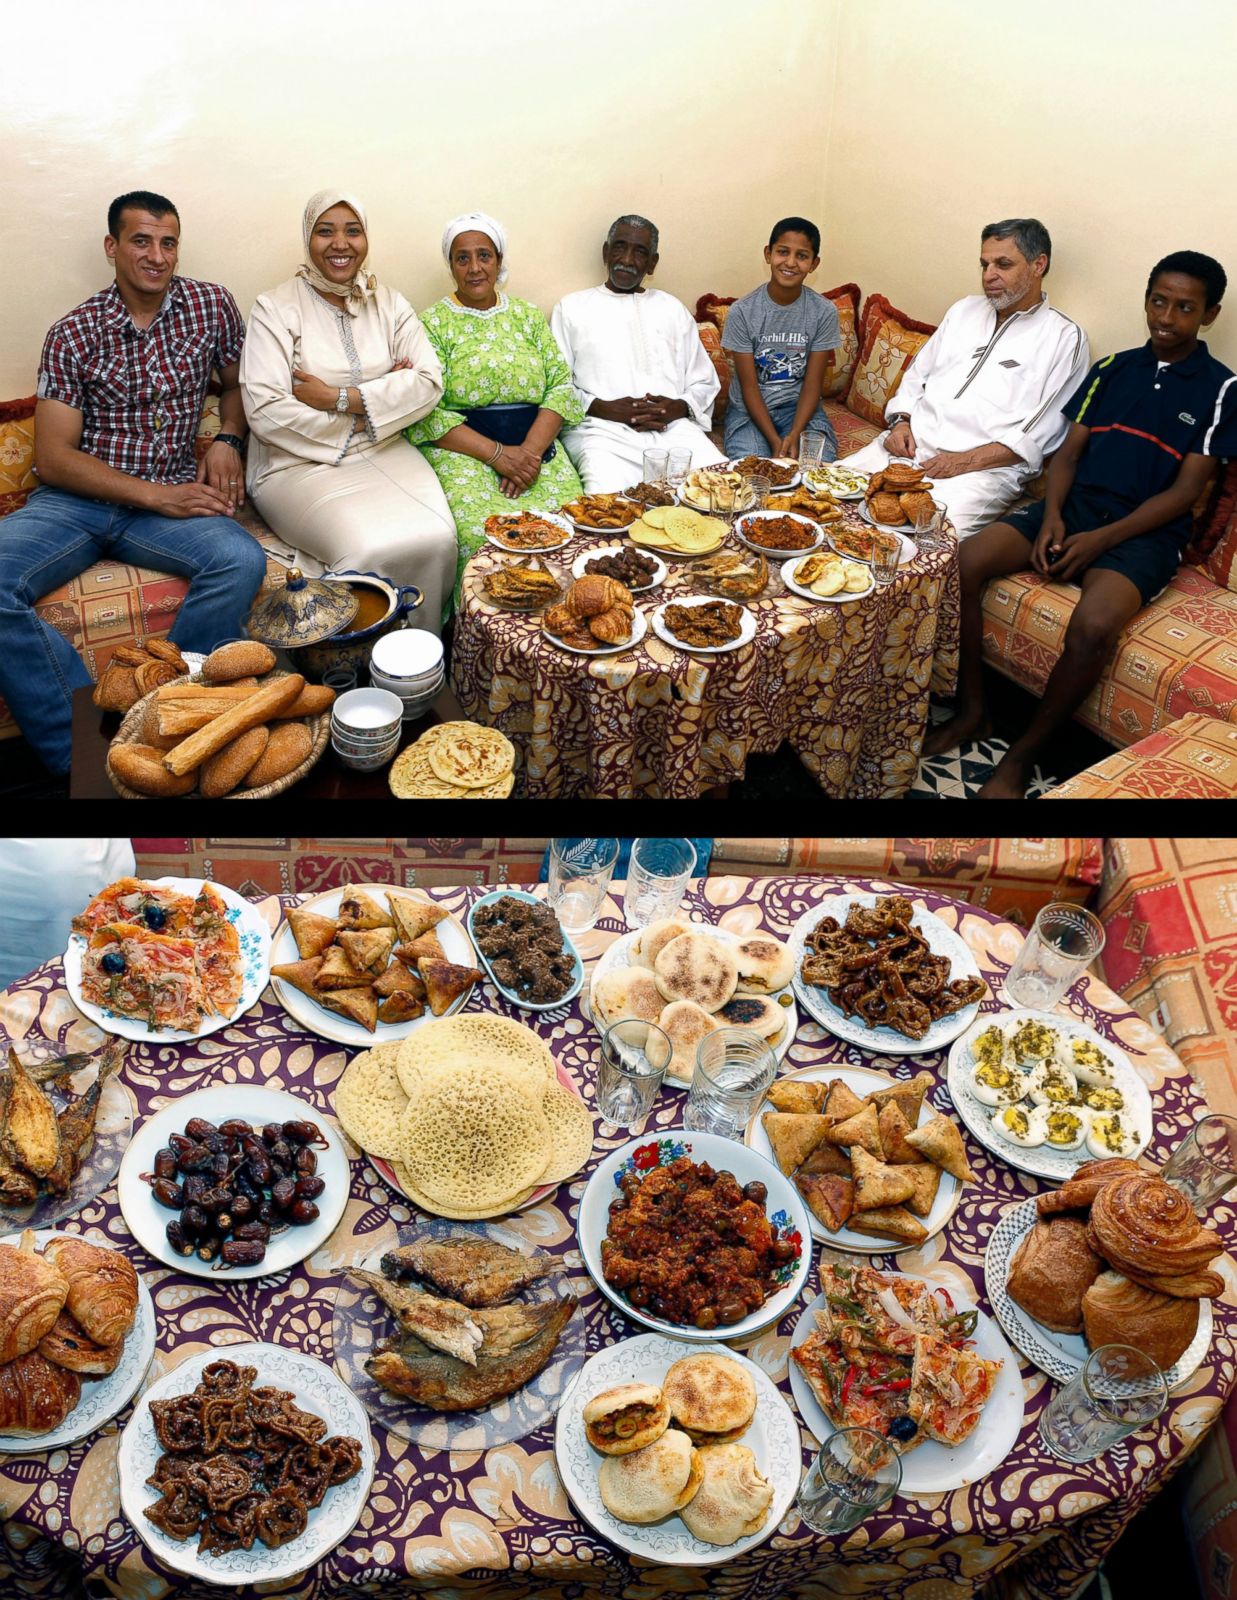 Ramadan 'Iftar' Meals From Around the World Photos | Image #41 - ABC News